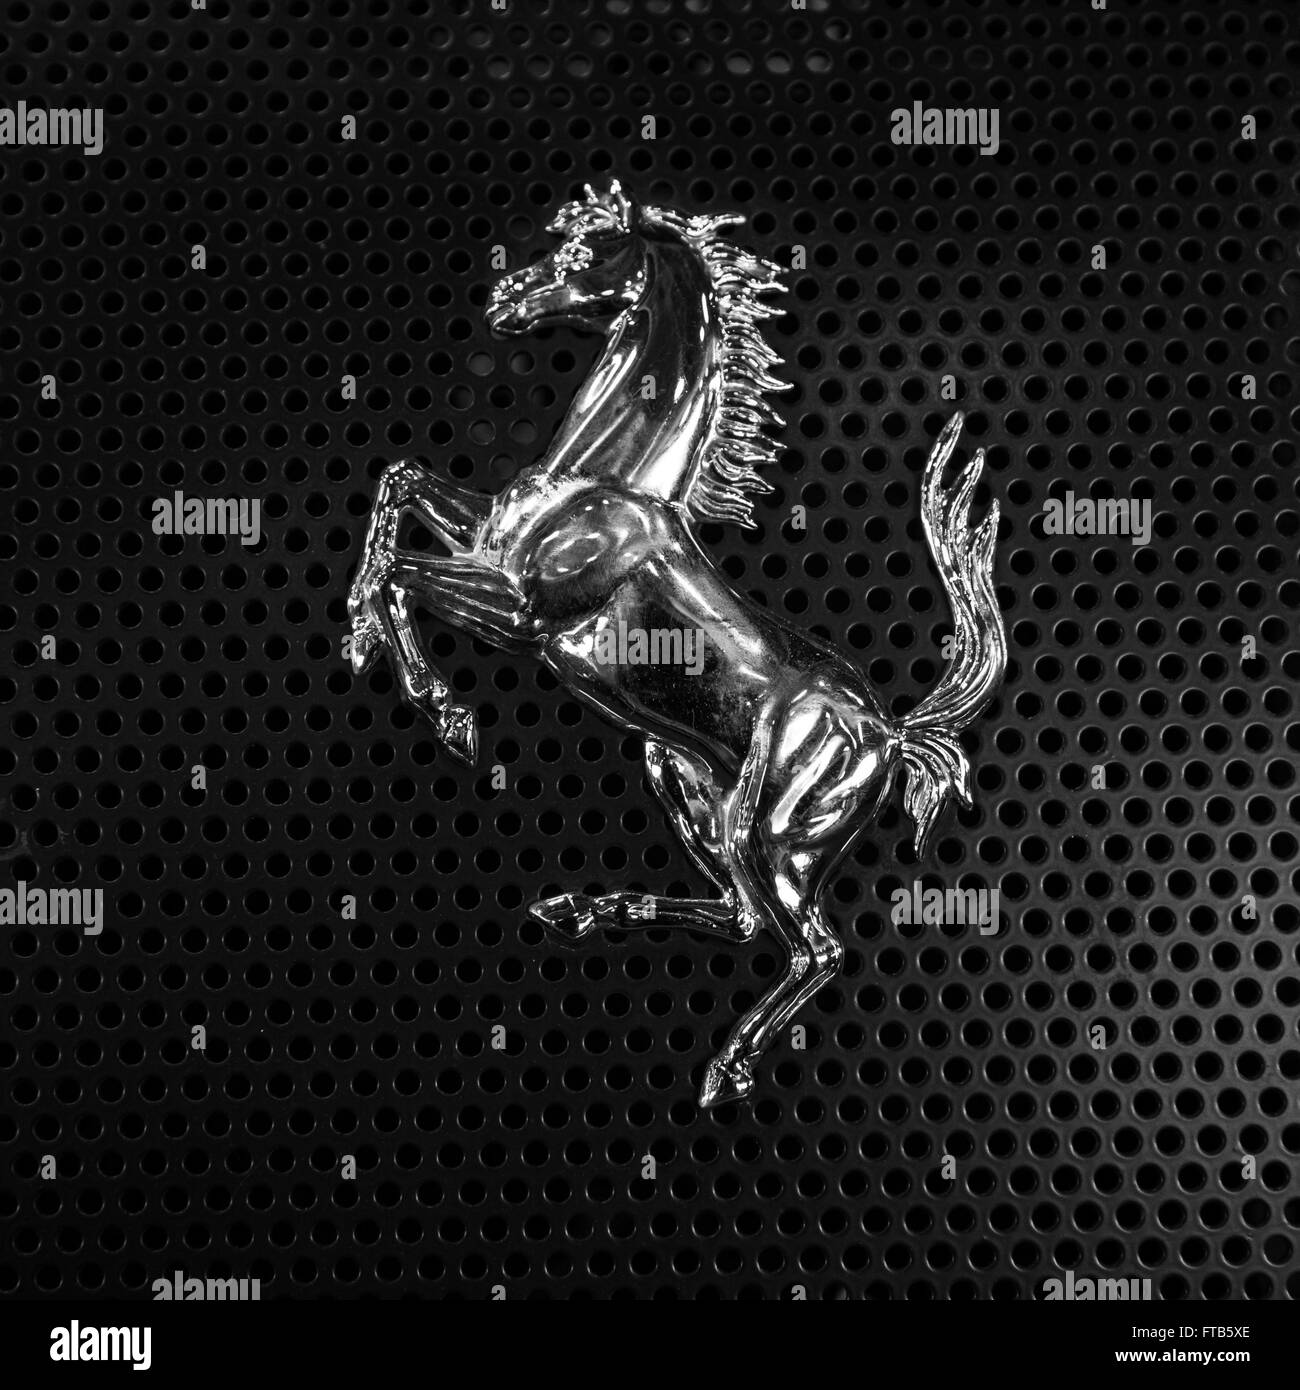 Verona, Italy - May 09,2015: The famous Ferrari 'prancing horse' symbol in silver version. Stock Photo